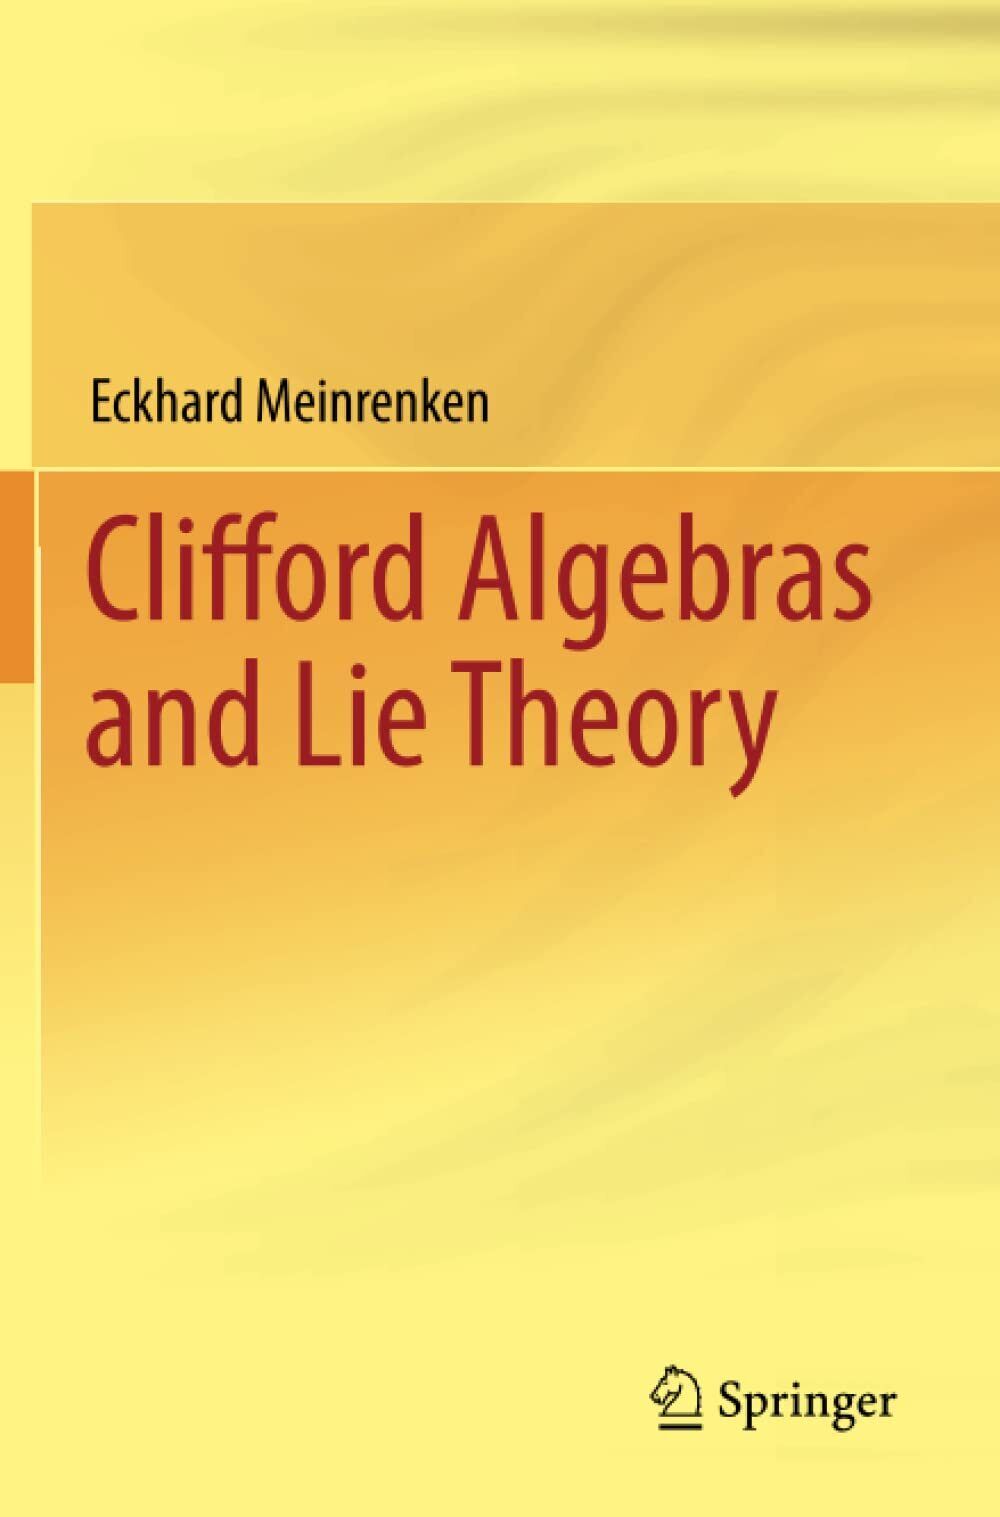 Clifford Algebras and Lie Theory - Eckhard Meinrenken - Springer, 2014 libro usato